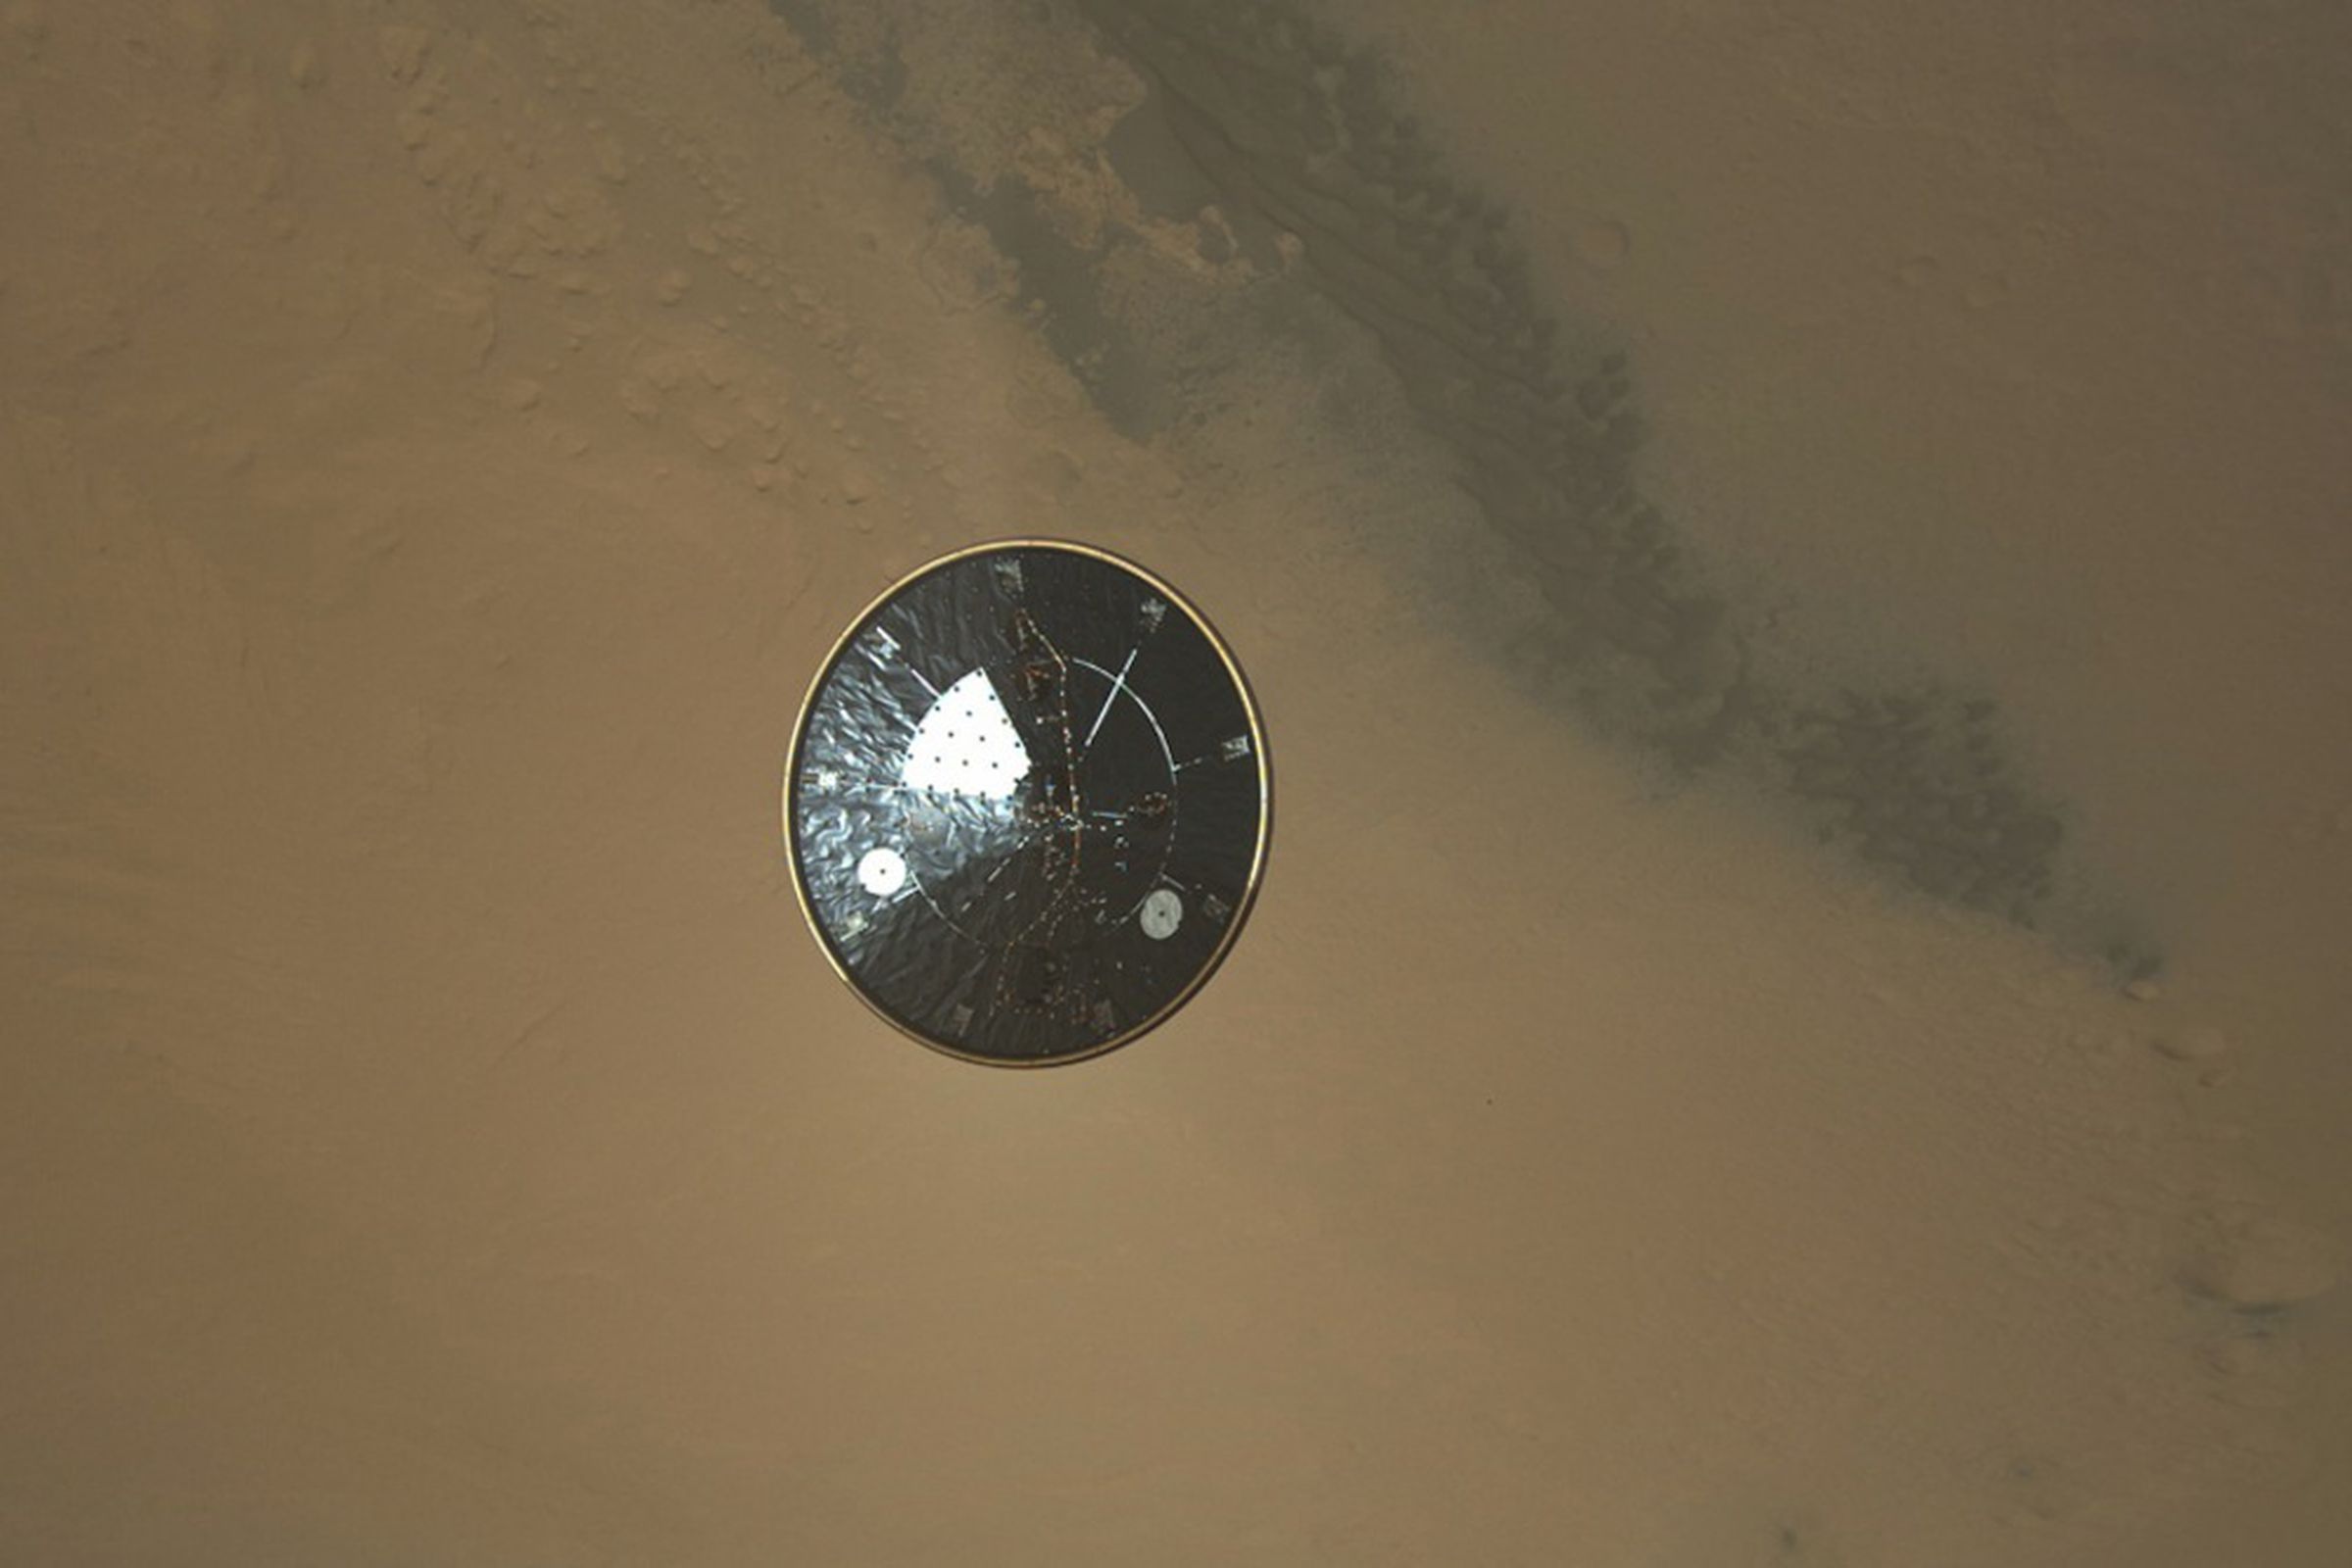 Curiosity rover heat shield ejected (Credit: NASA/JPL-Caltech/MSSS)